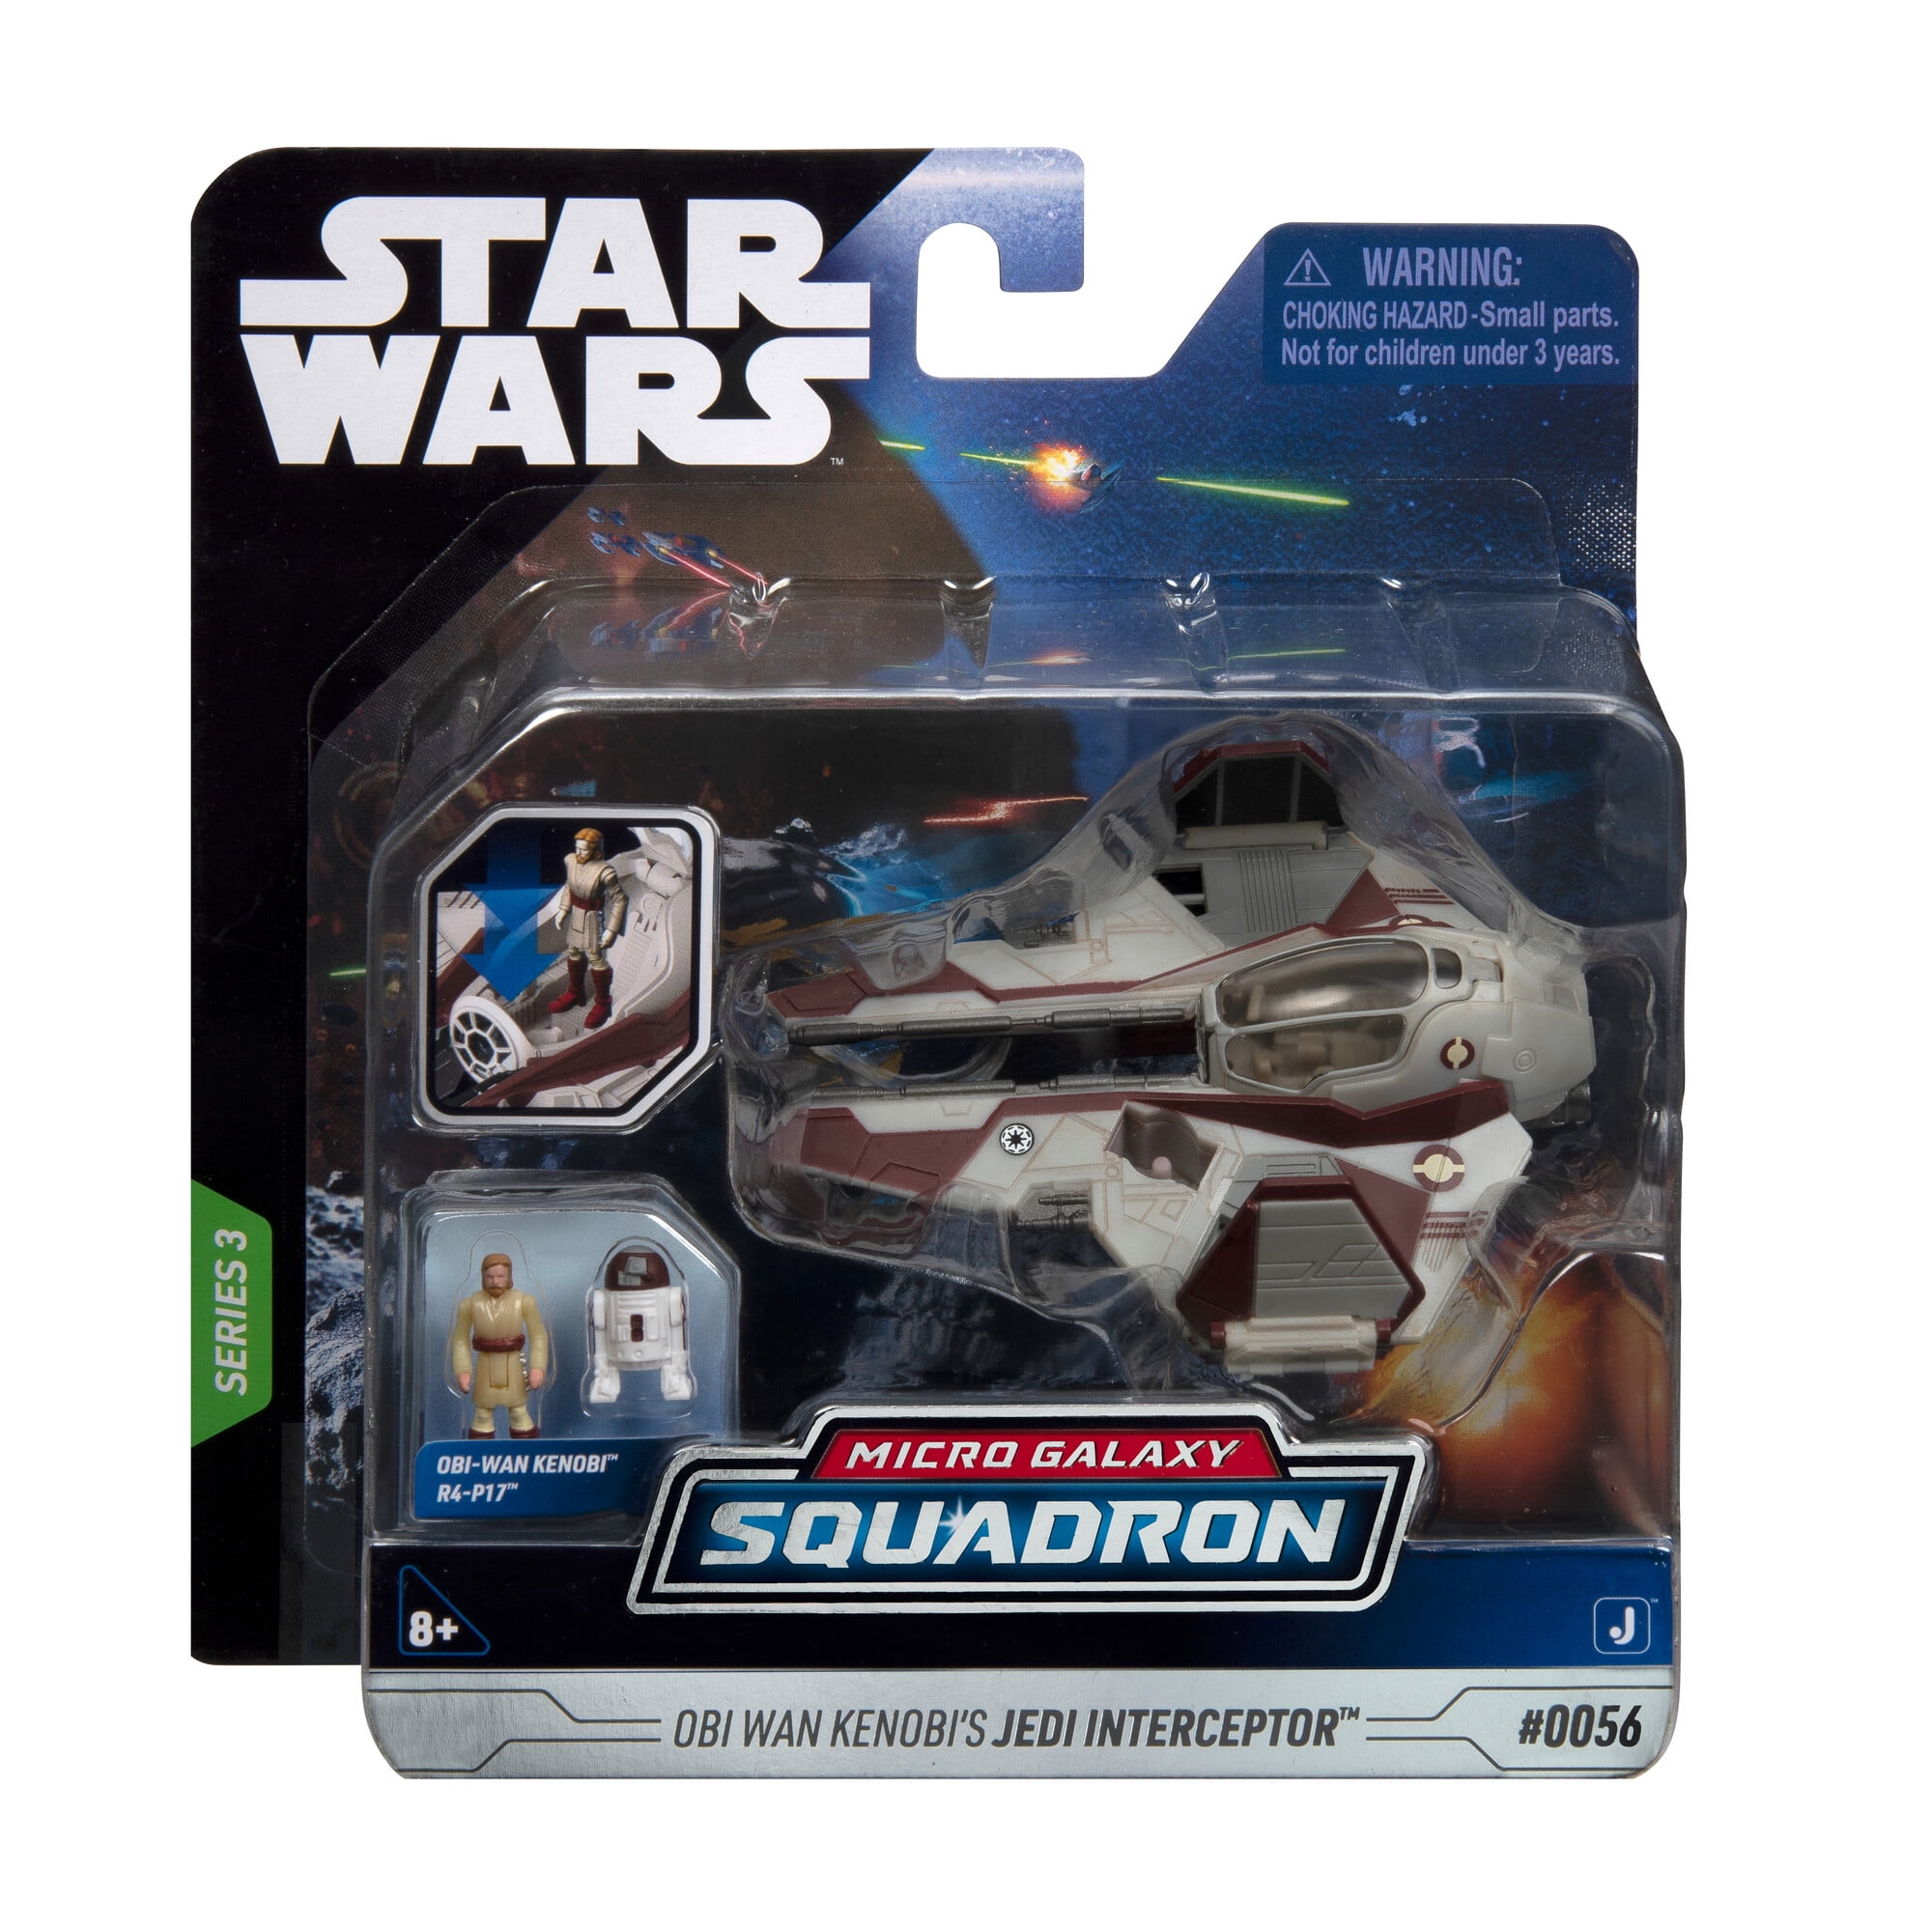 Star Wars Micro Galaxy Squadron Obi-Wan Kenobi's Jedi Interceptor Vehicle - 3  inch Light Armor Class Vehicle with Two 1 inch Figure Accessories 